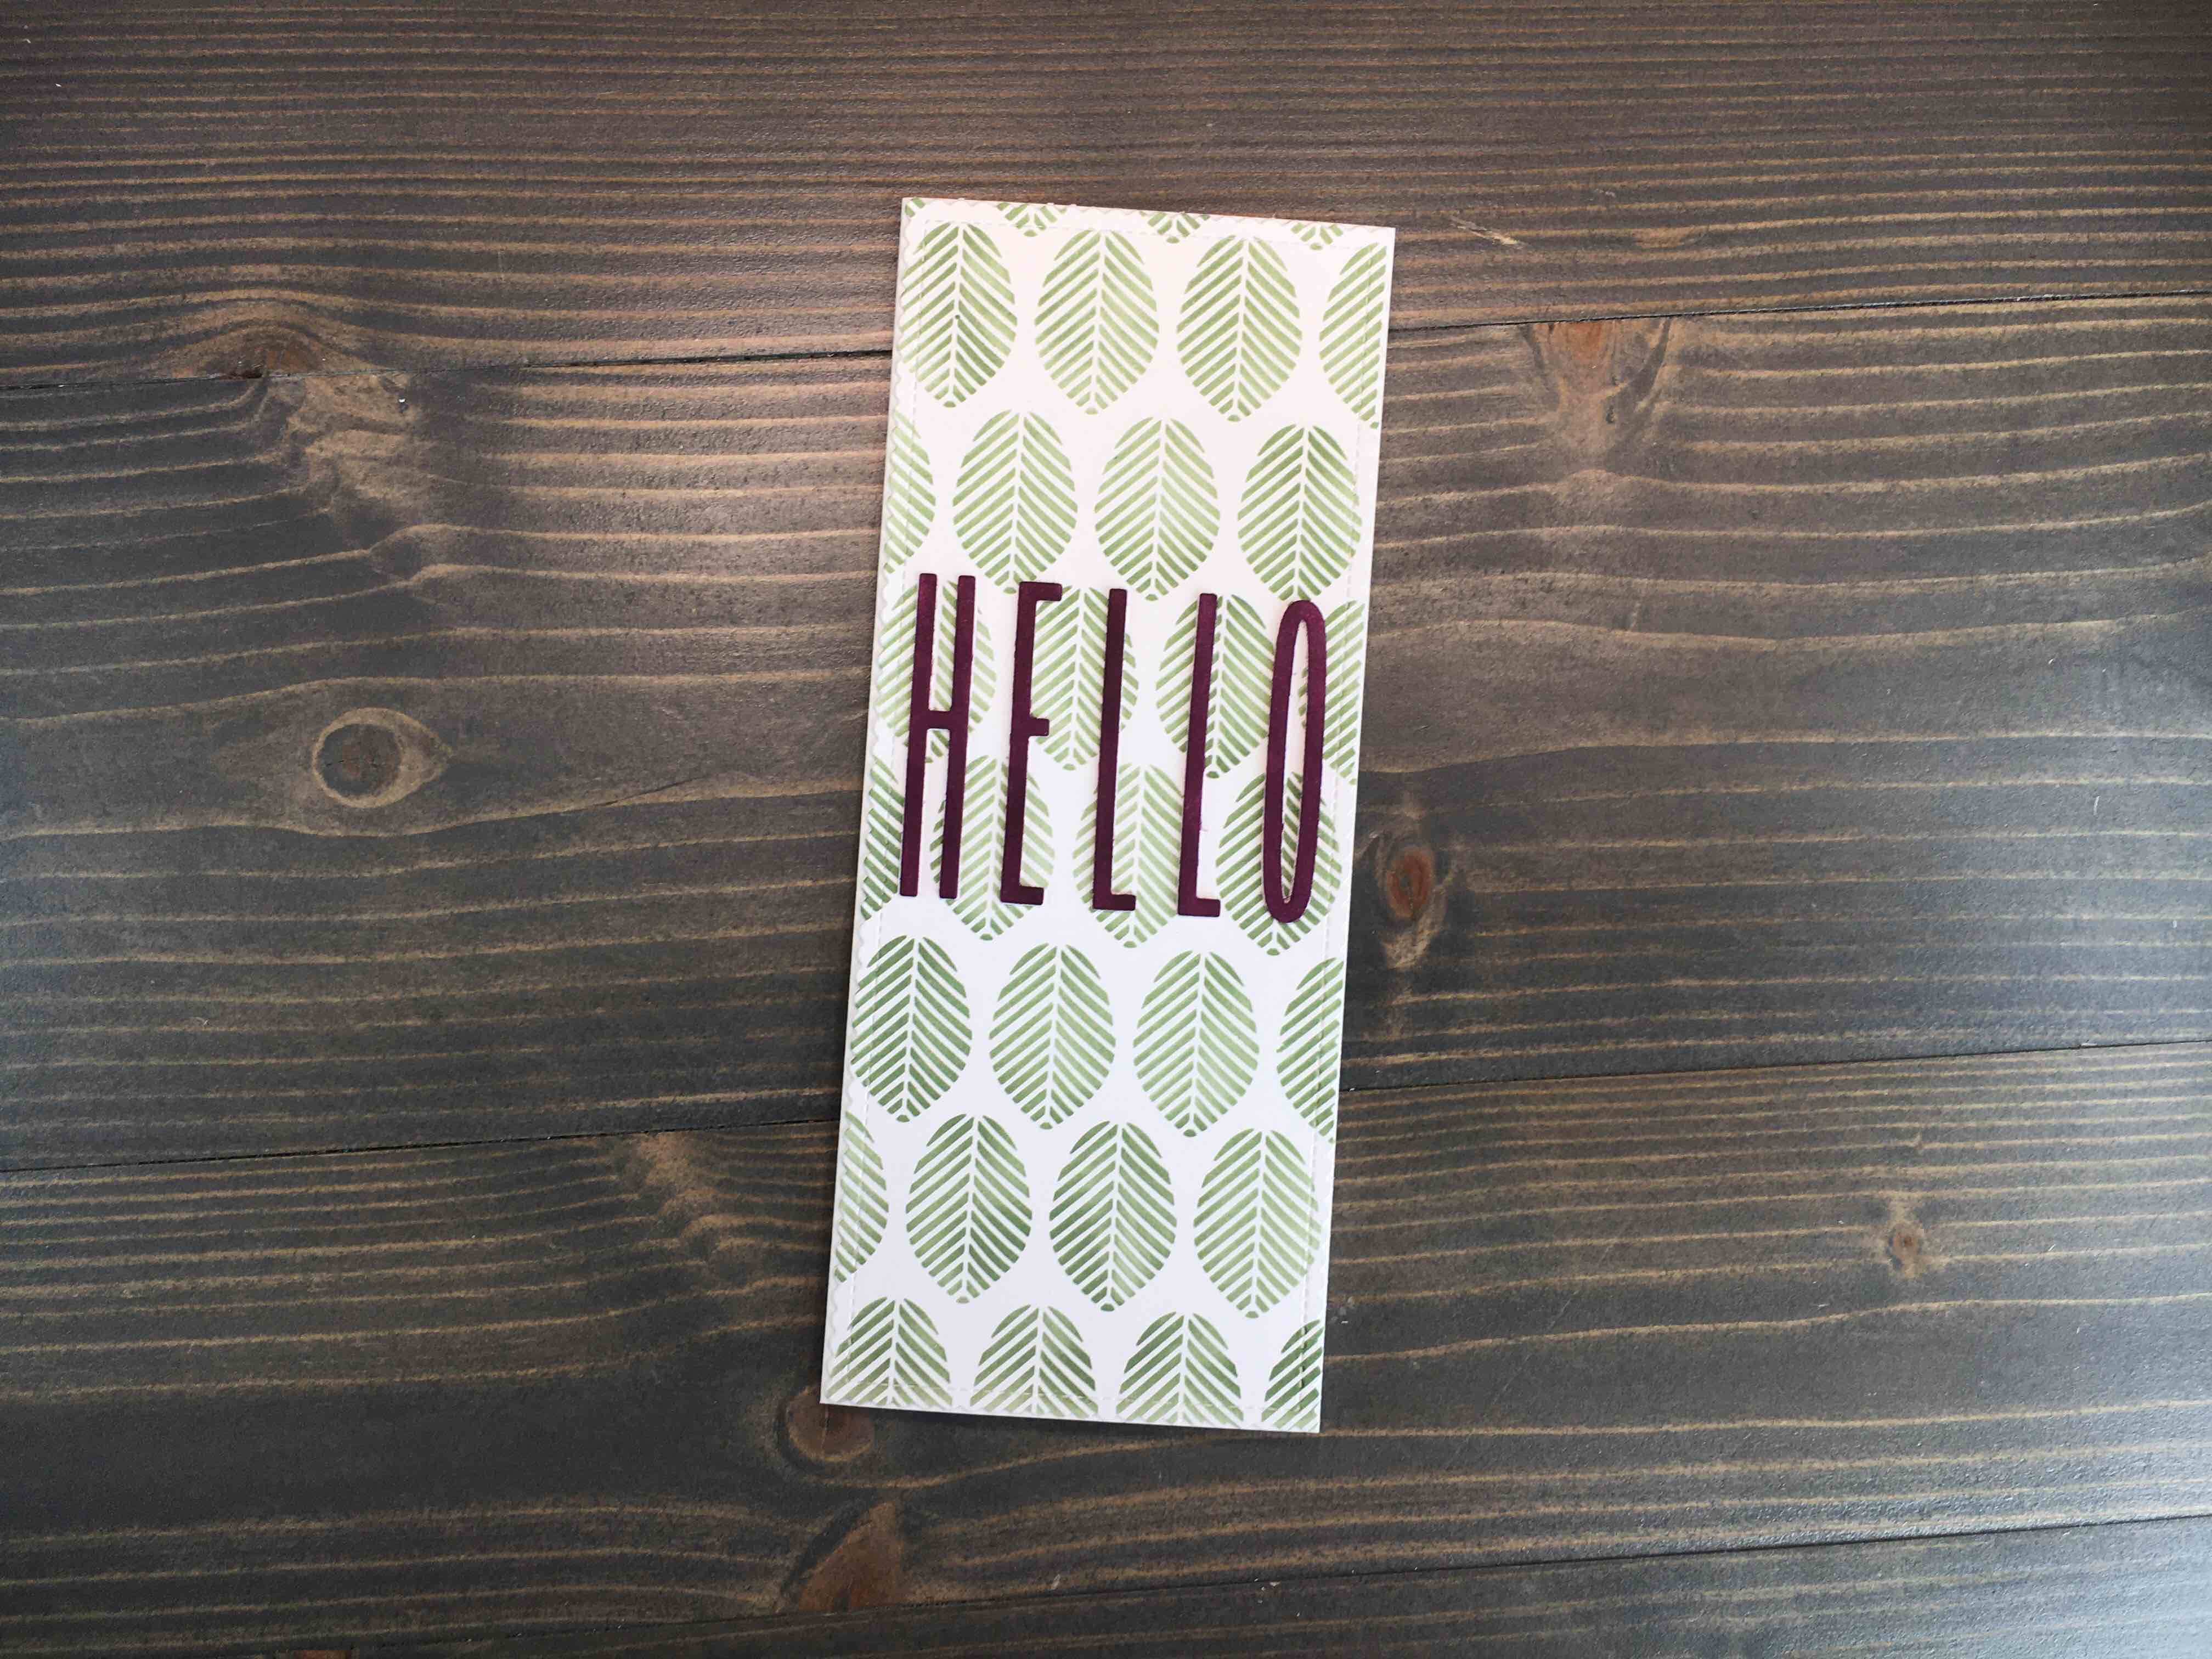 Simple Hello Card